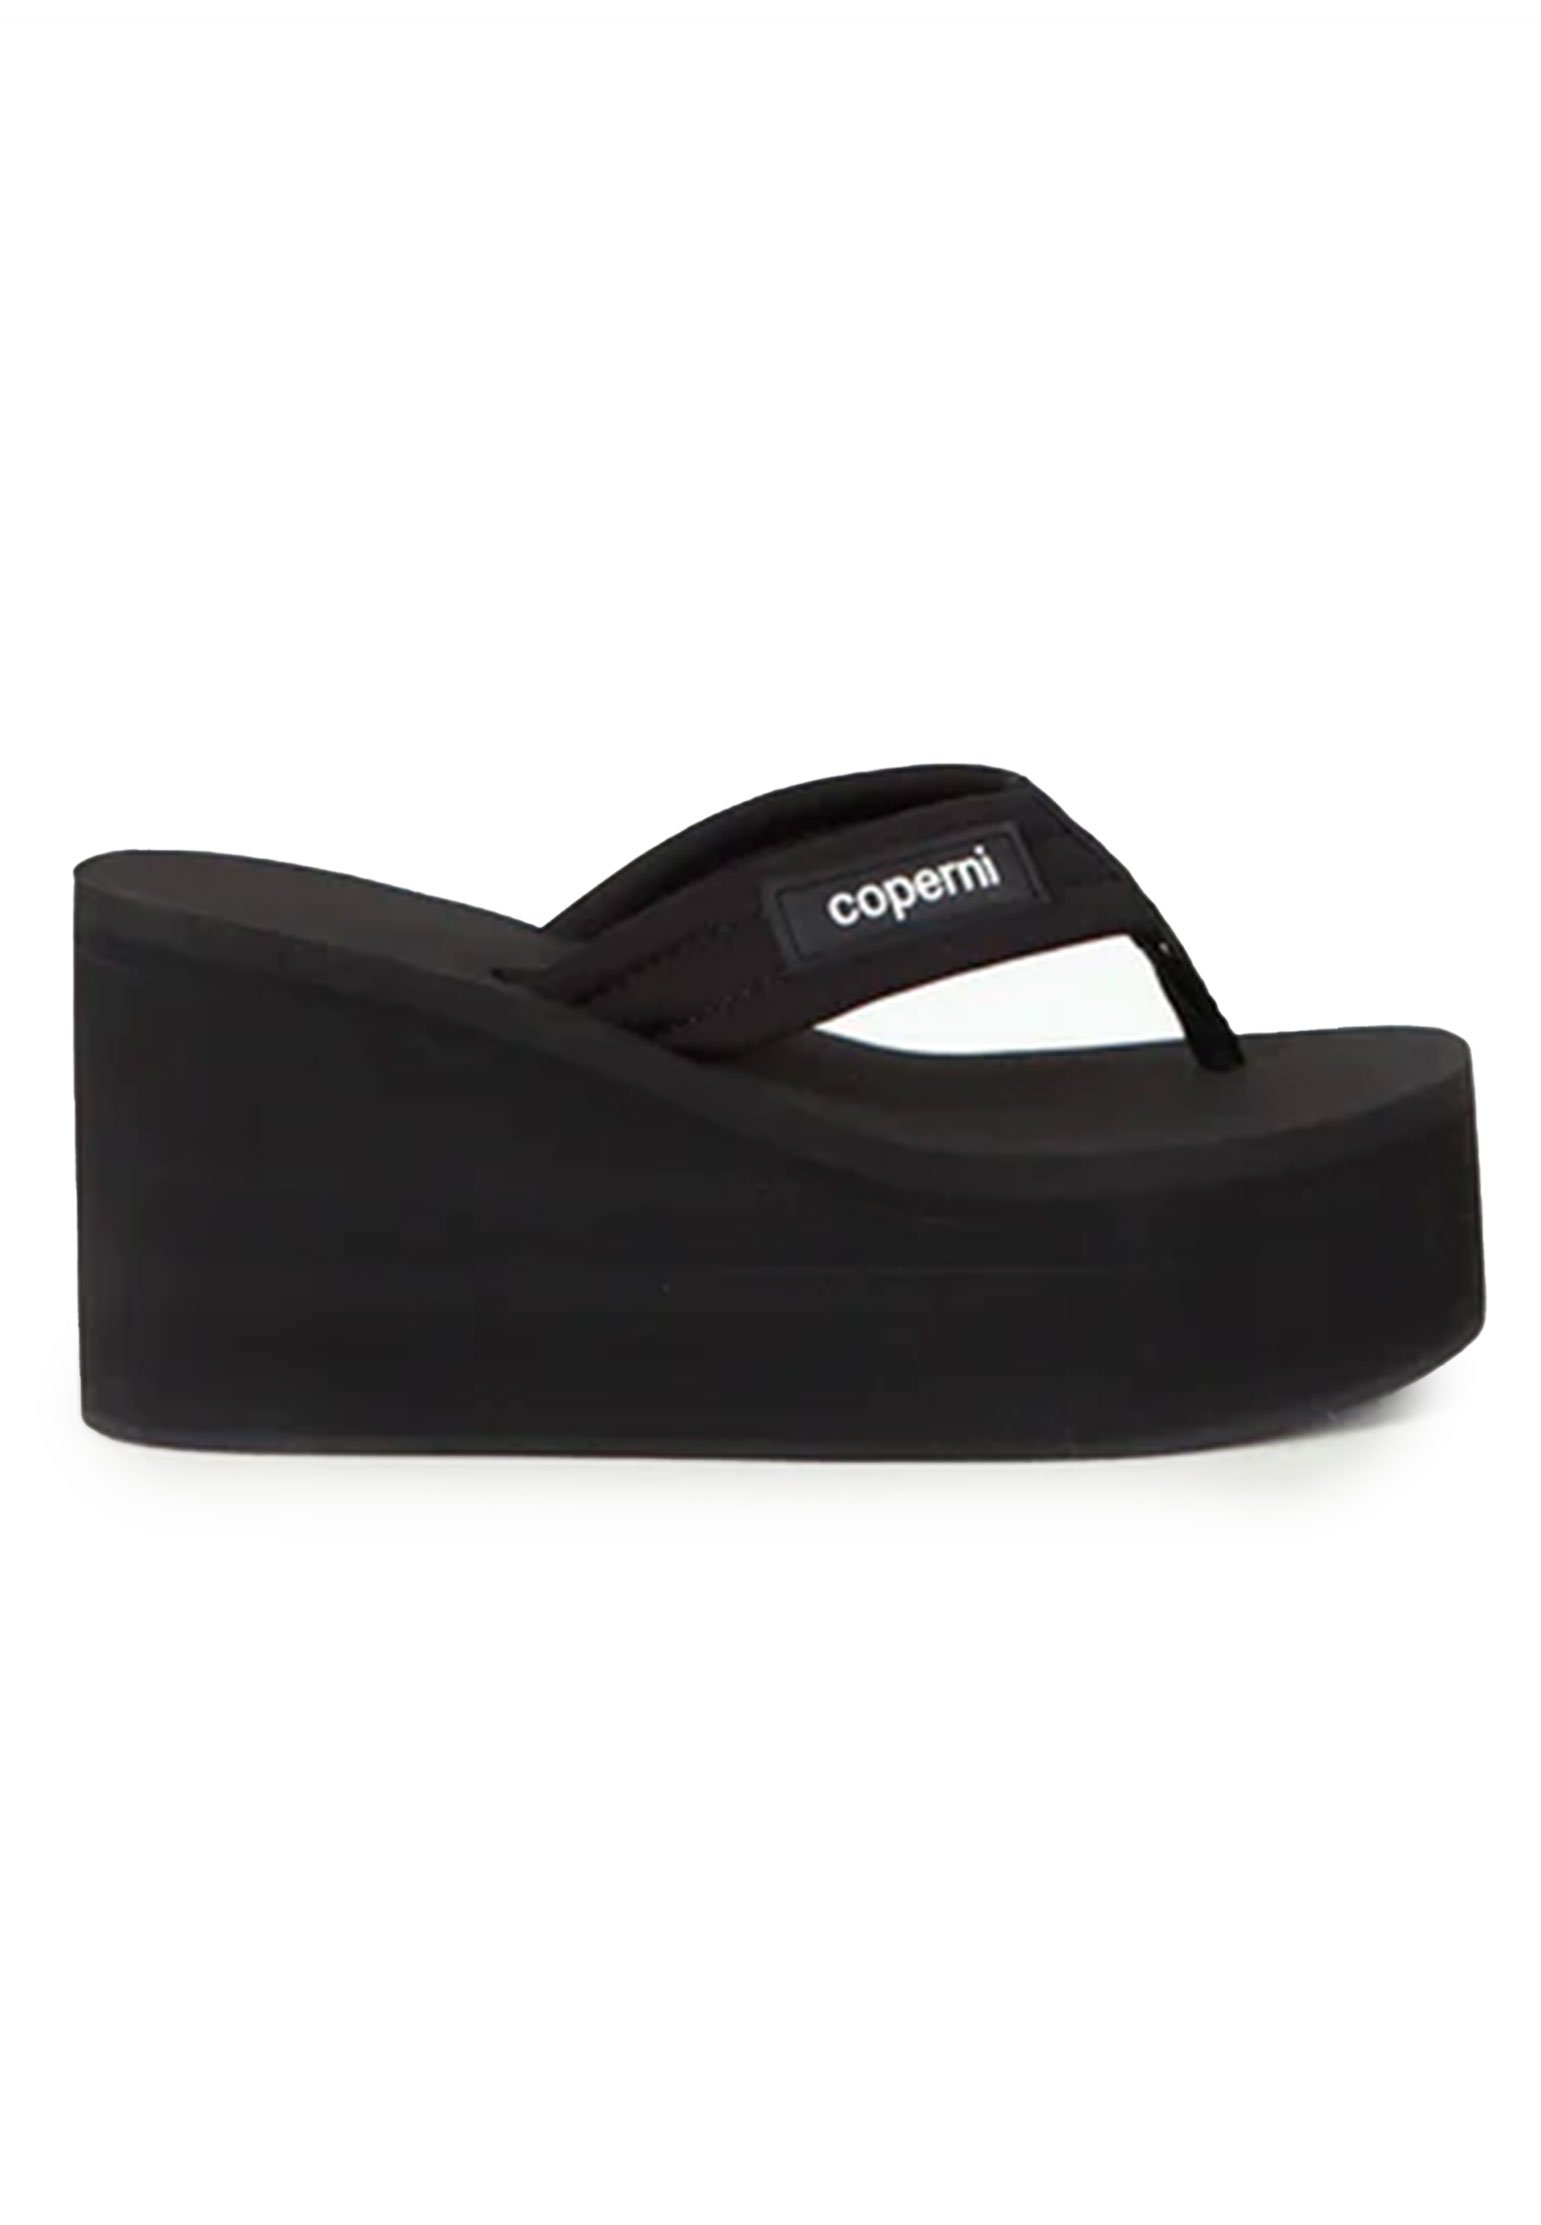 Sandals COPERNI Color: black (Code: 3695) in online store Allure